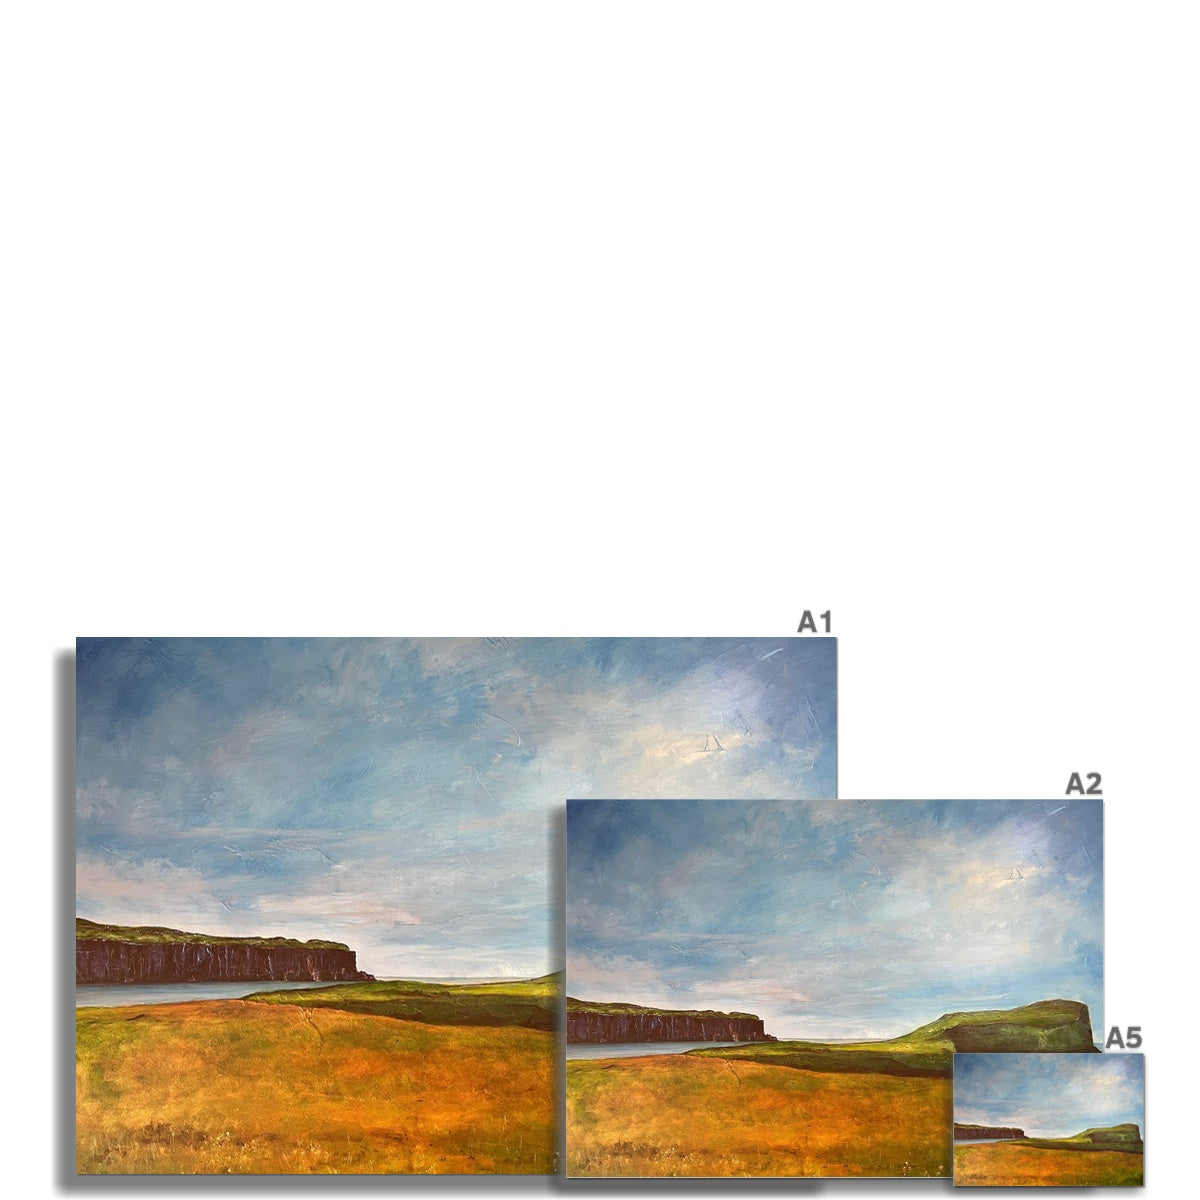 Approaching Oronsay Skye Painting | Fine Art Prints From Scotland-Unframed Prints-Skye Art Gallery-Paintings, Prints, Homeware, Art Gifts From Scotland By Scottish Artist Kevin Hunter